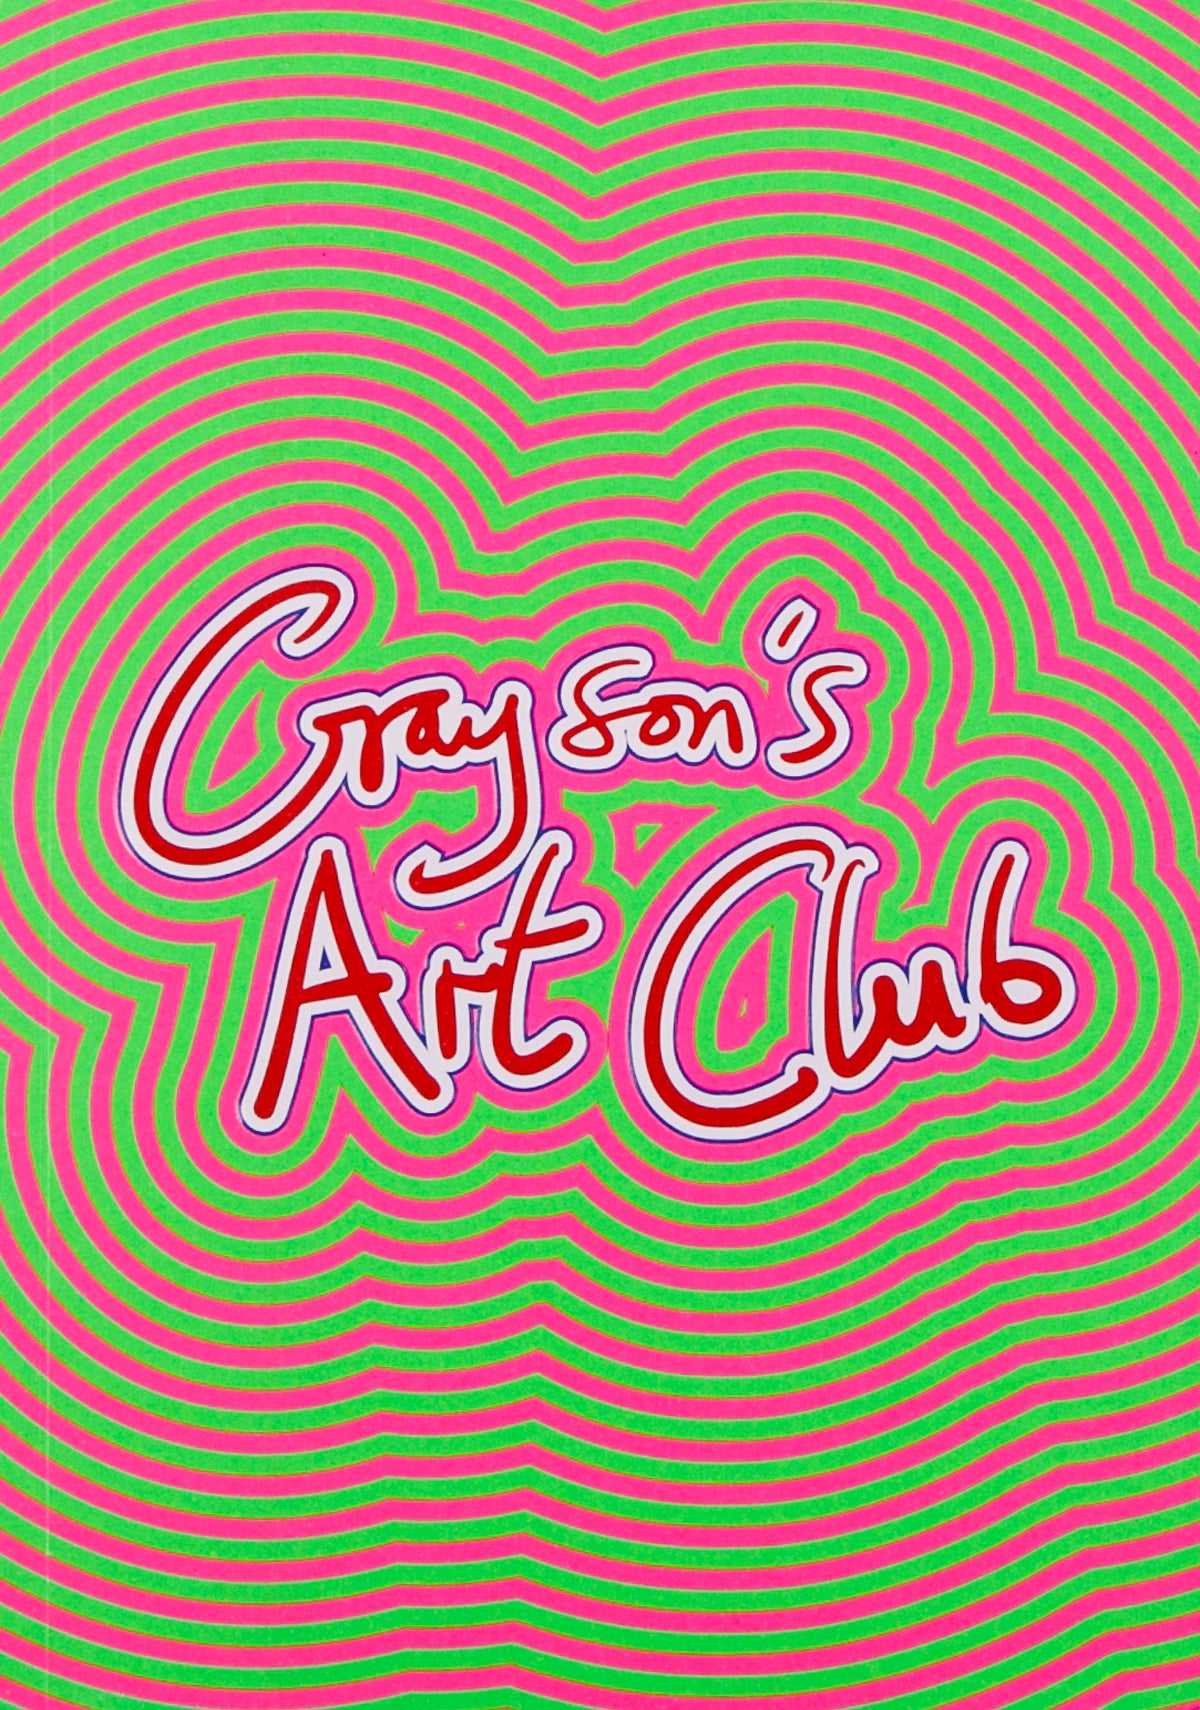 Grayson’s Art Club: The Exhibition